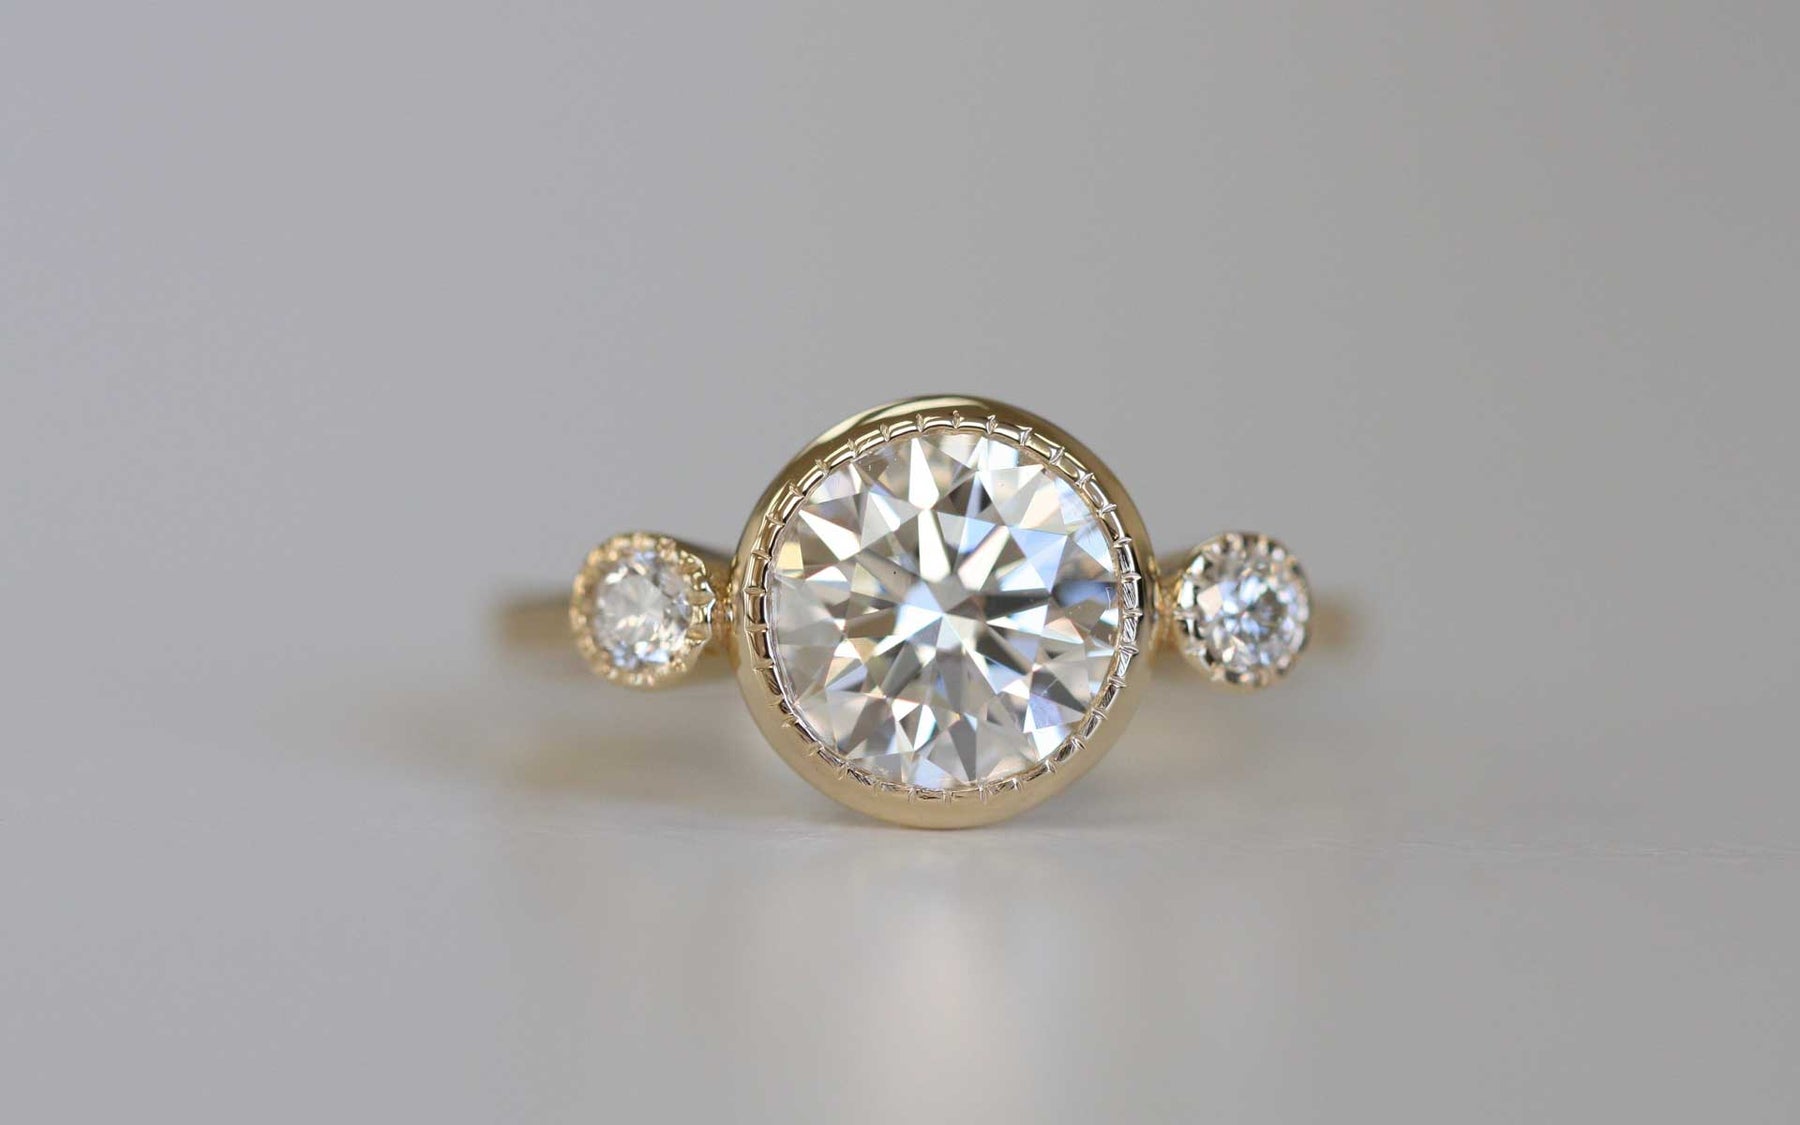 14k yellow gold custom engagement ring with round cut white diamond center stone and two white diamonds with milgrain detail